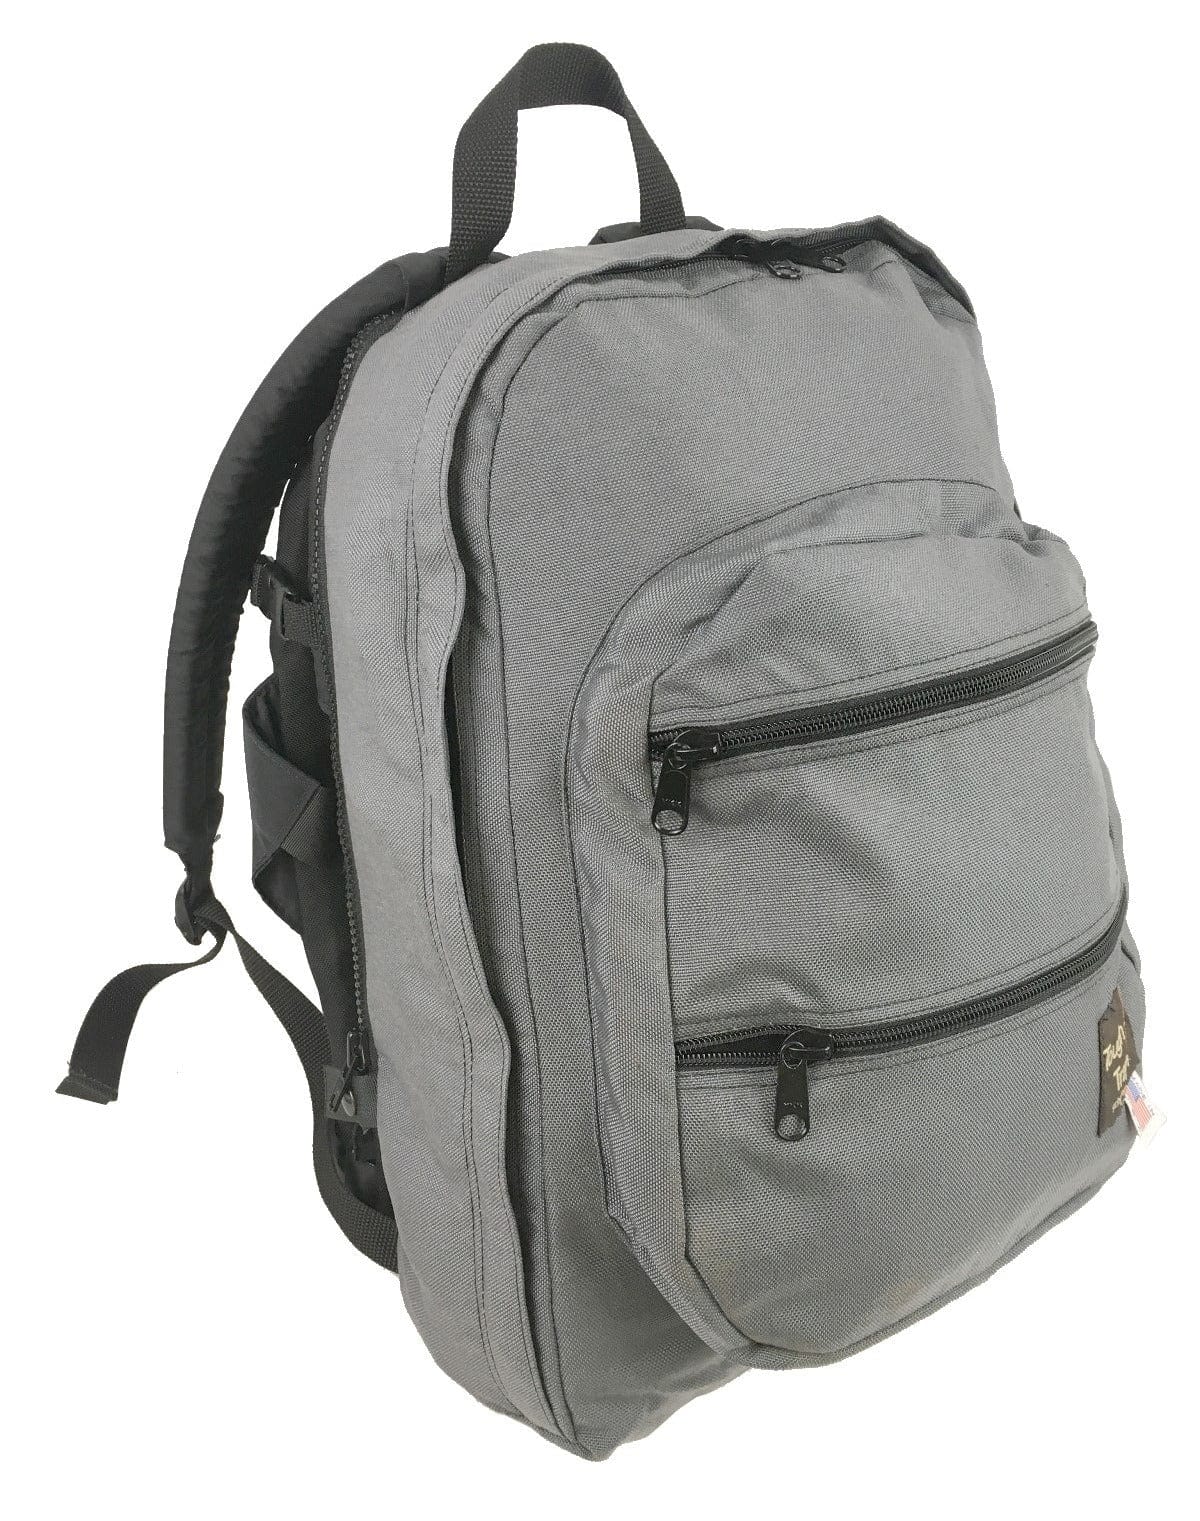 David Jones Paris Backpack - JENNIFER | Indigo Bags & Accessories